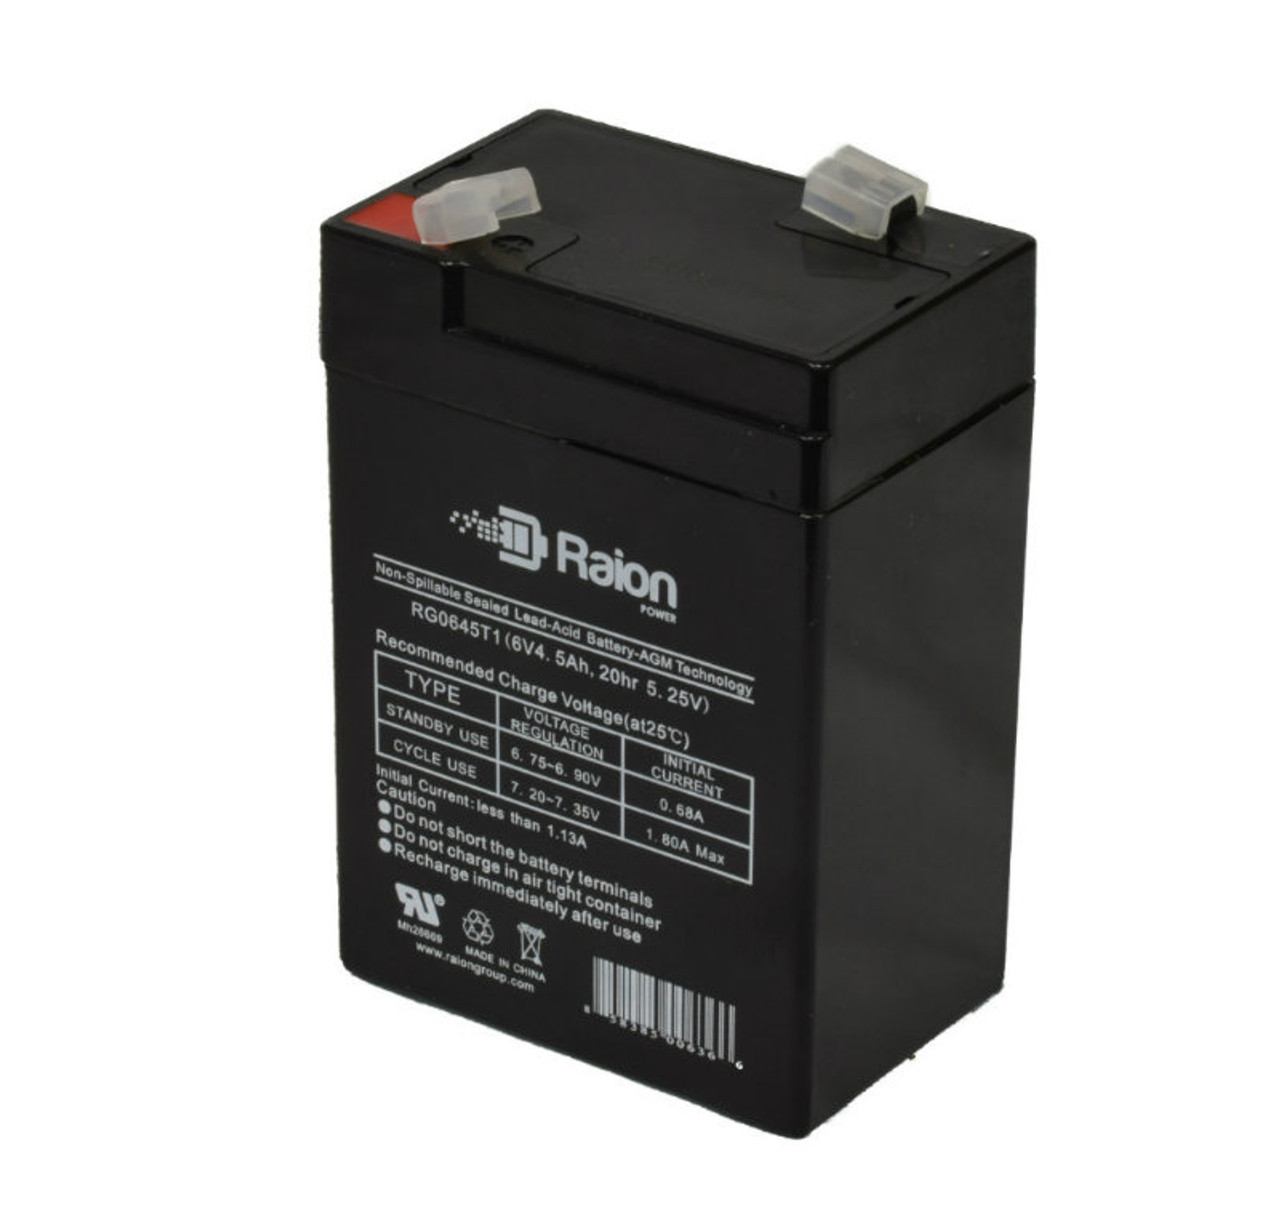 Raion Power RG0645T1 6V 4.5Ah Replacement Battery Cartridge for XYC XT655